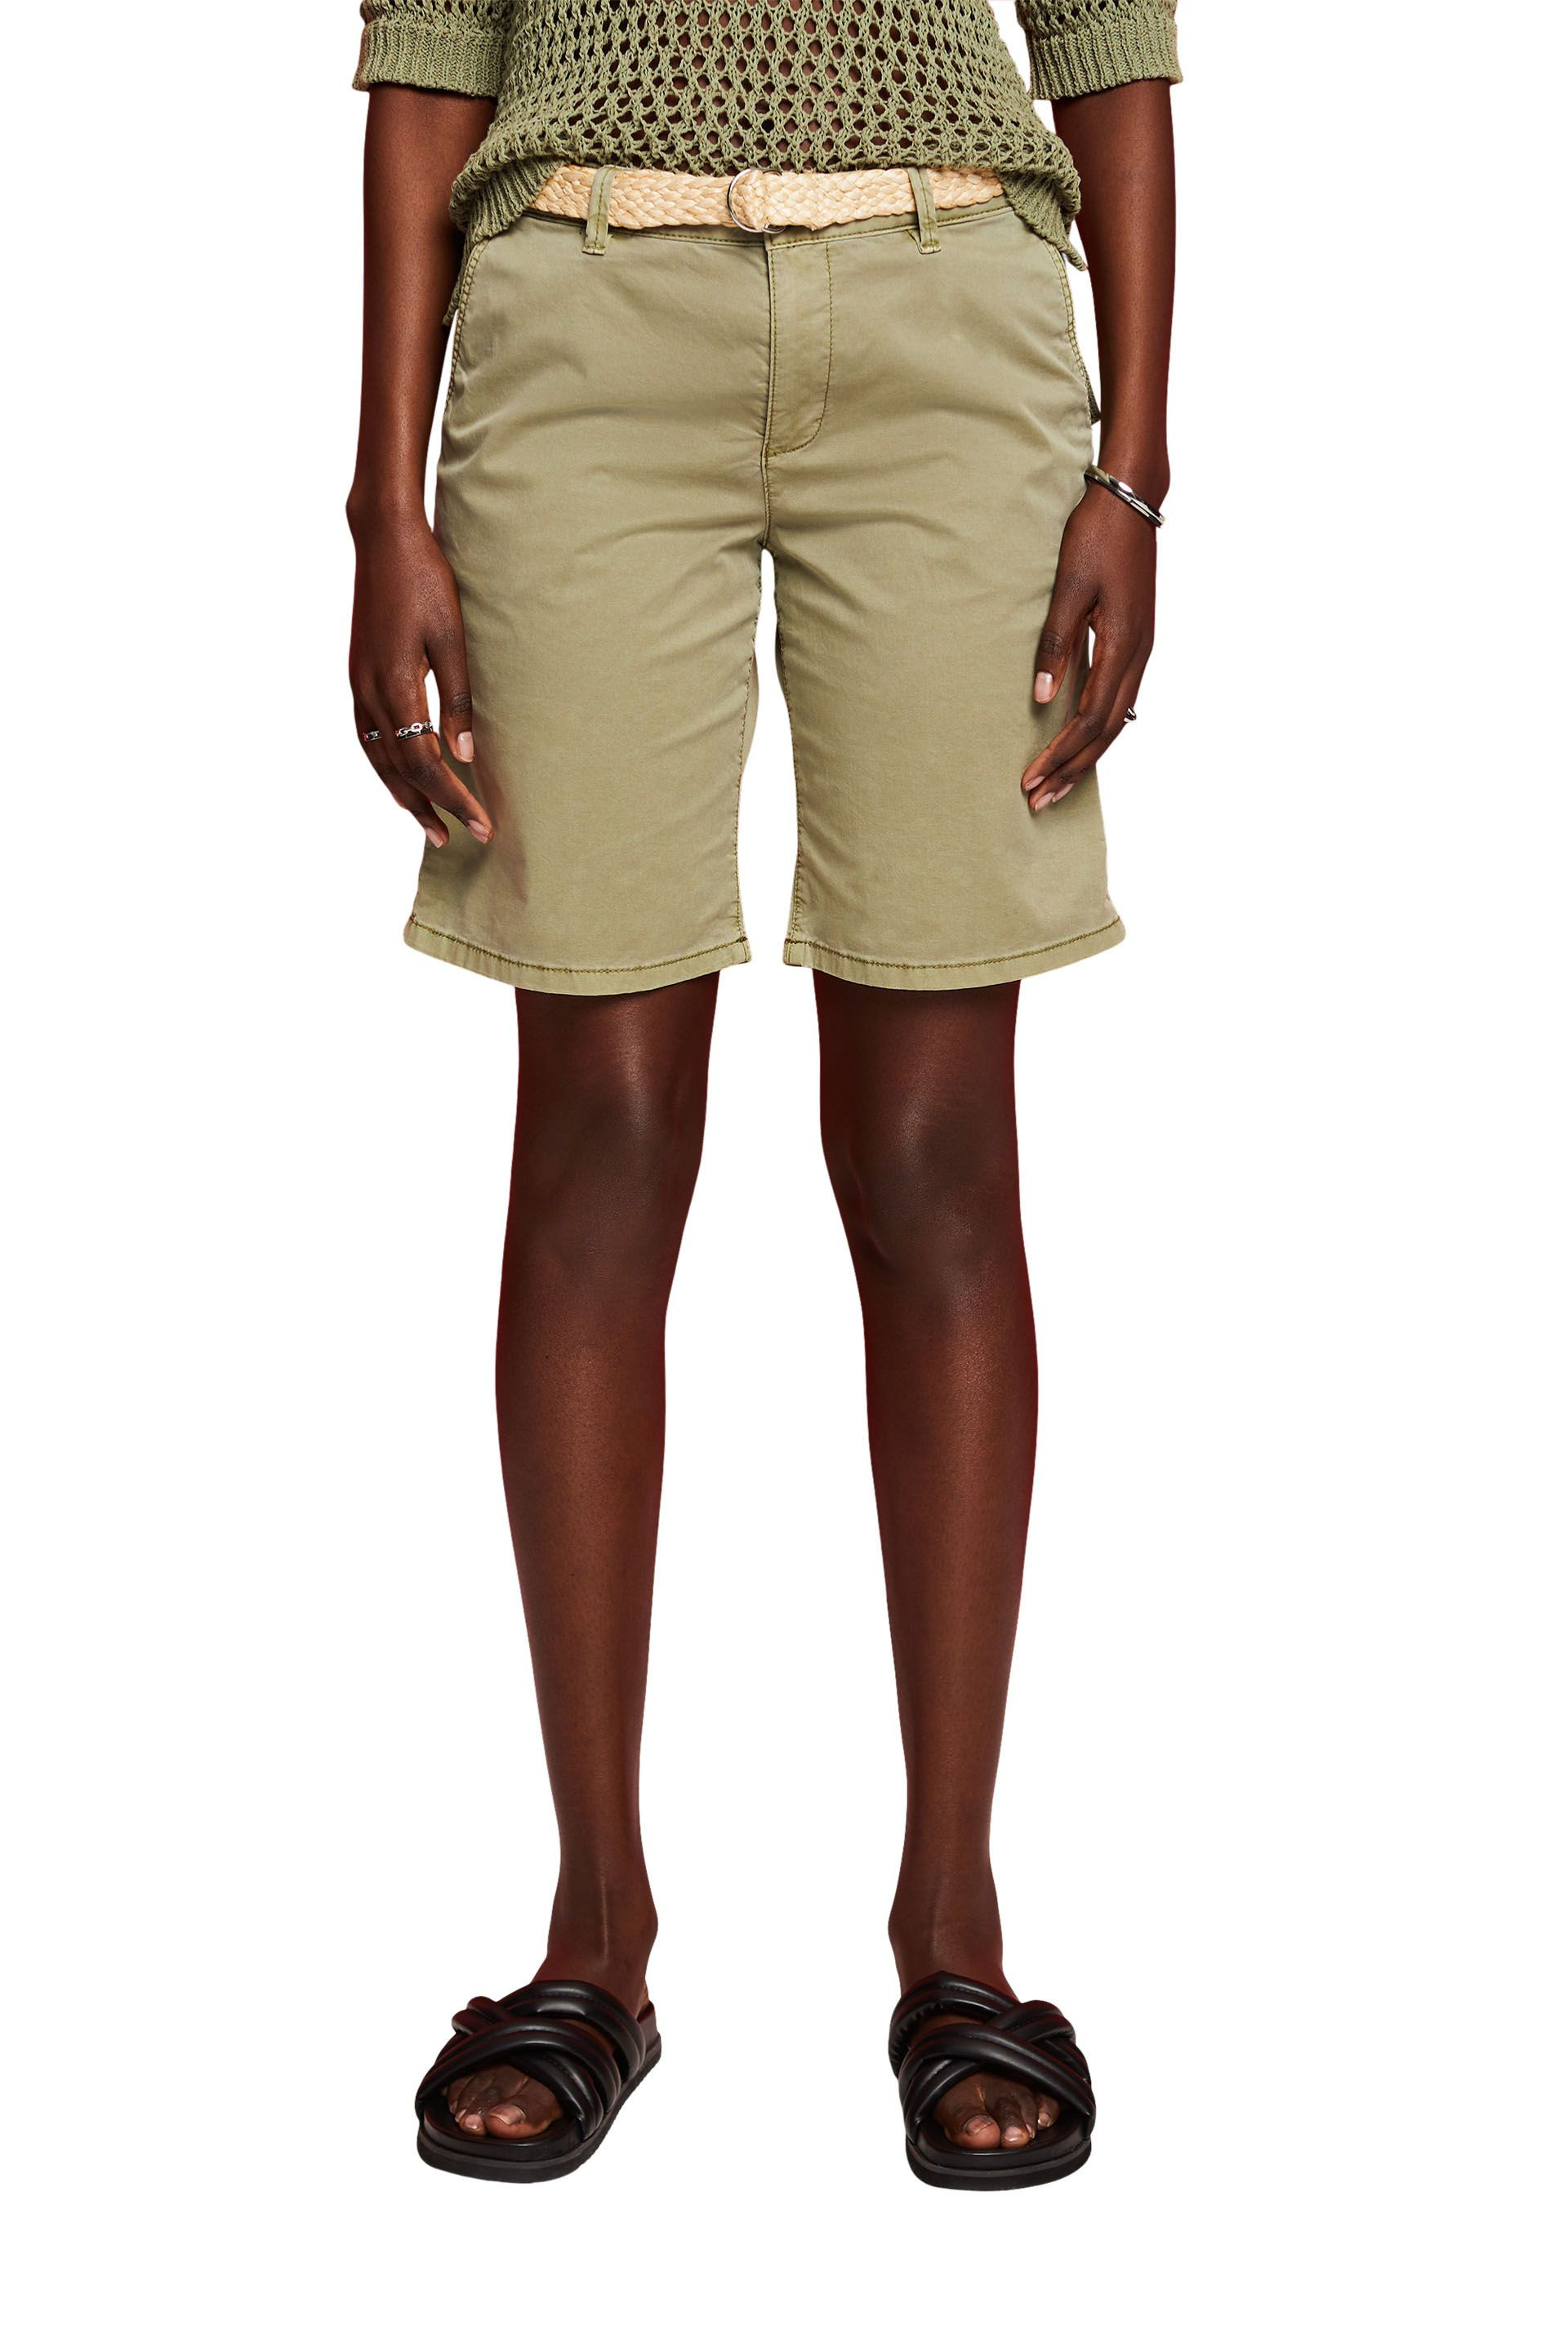 Esprit - Shorts con cintura intrecciata in rafia, Azzurro, large image number 1